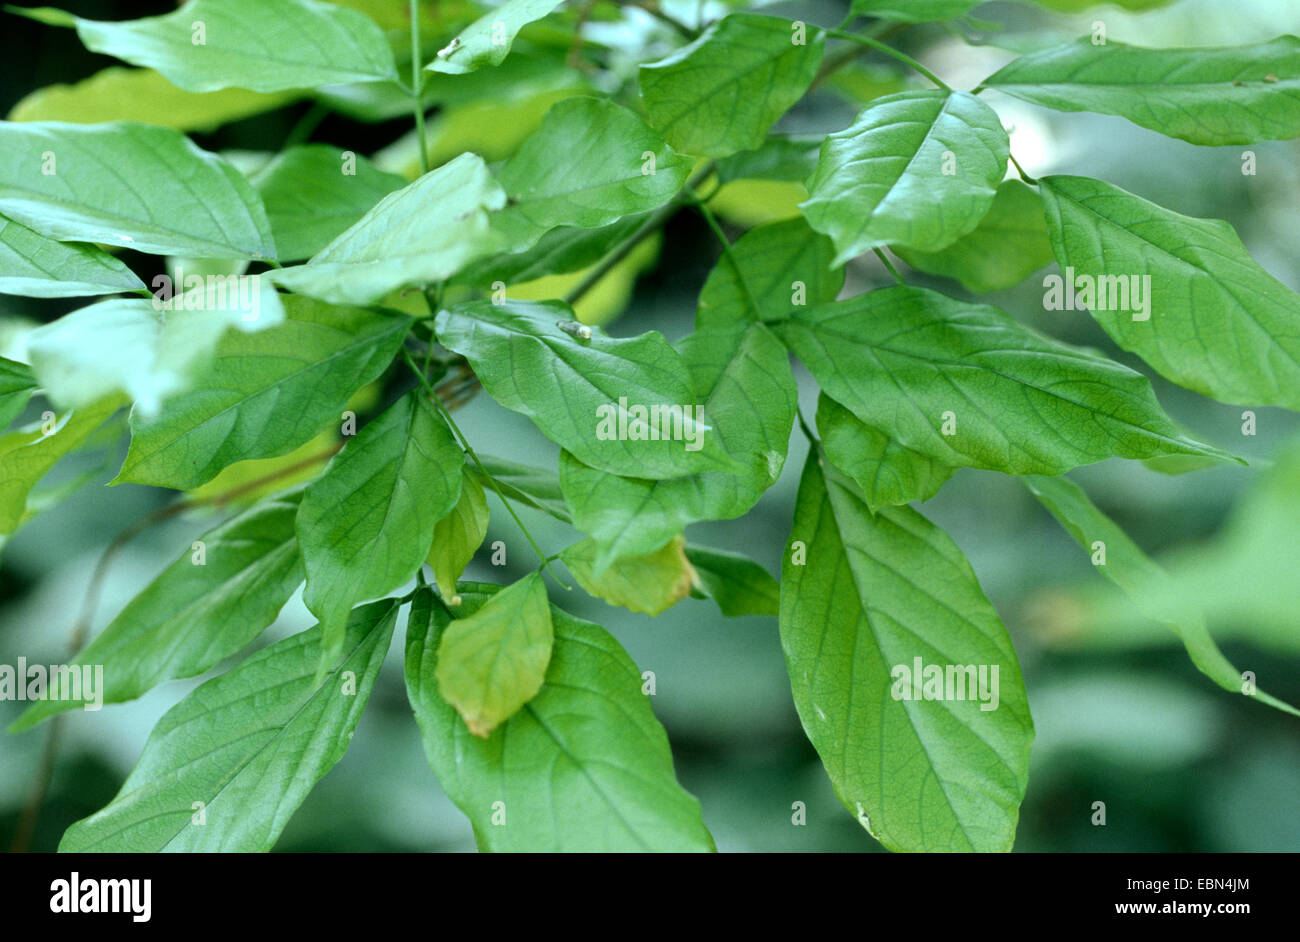 Indian Beech Tree, Honge Tree, Pongam Tree, Panigrahi (Pongamia pinnata, Pongamia glabra, Millettia pinnata, Derris indica), leaves Stock Photo